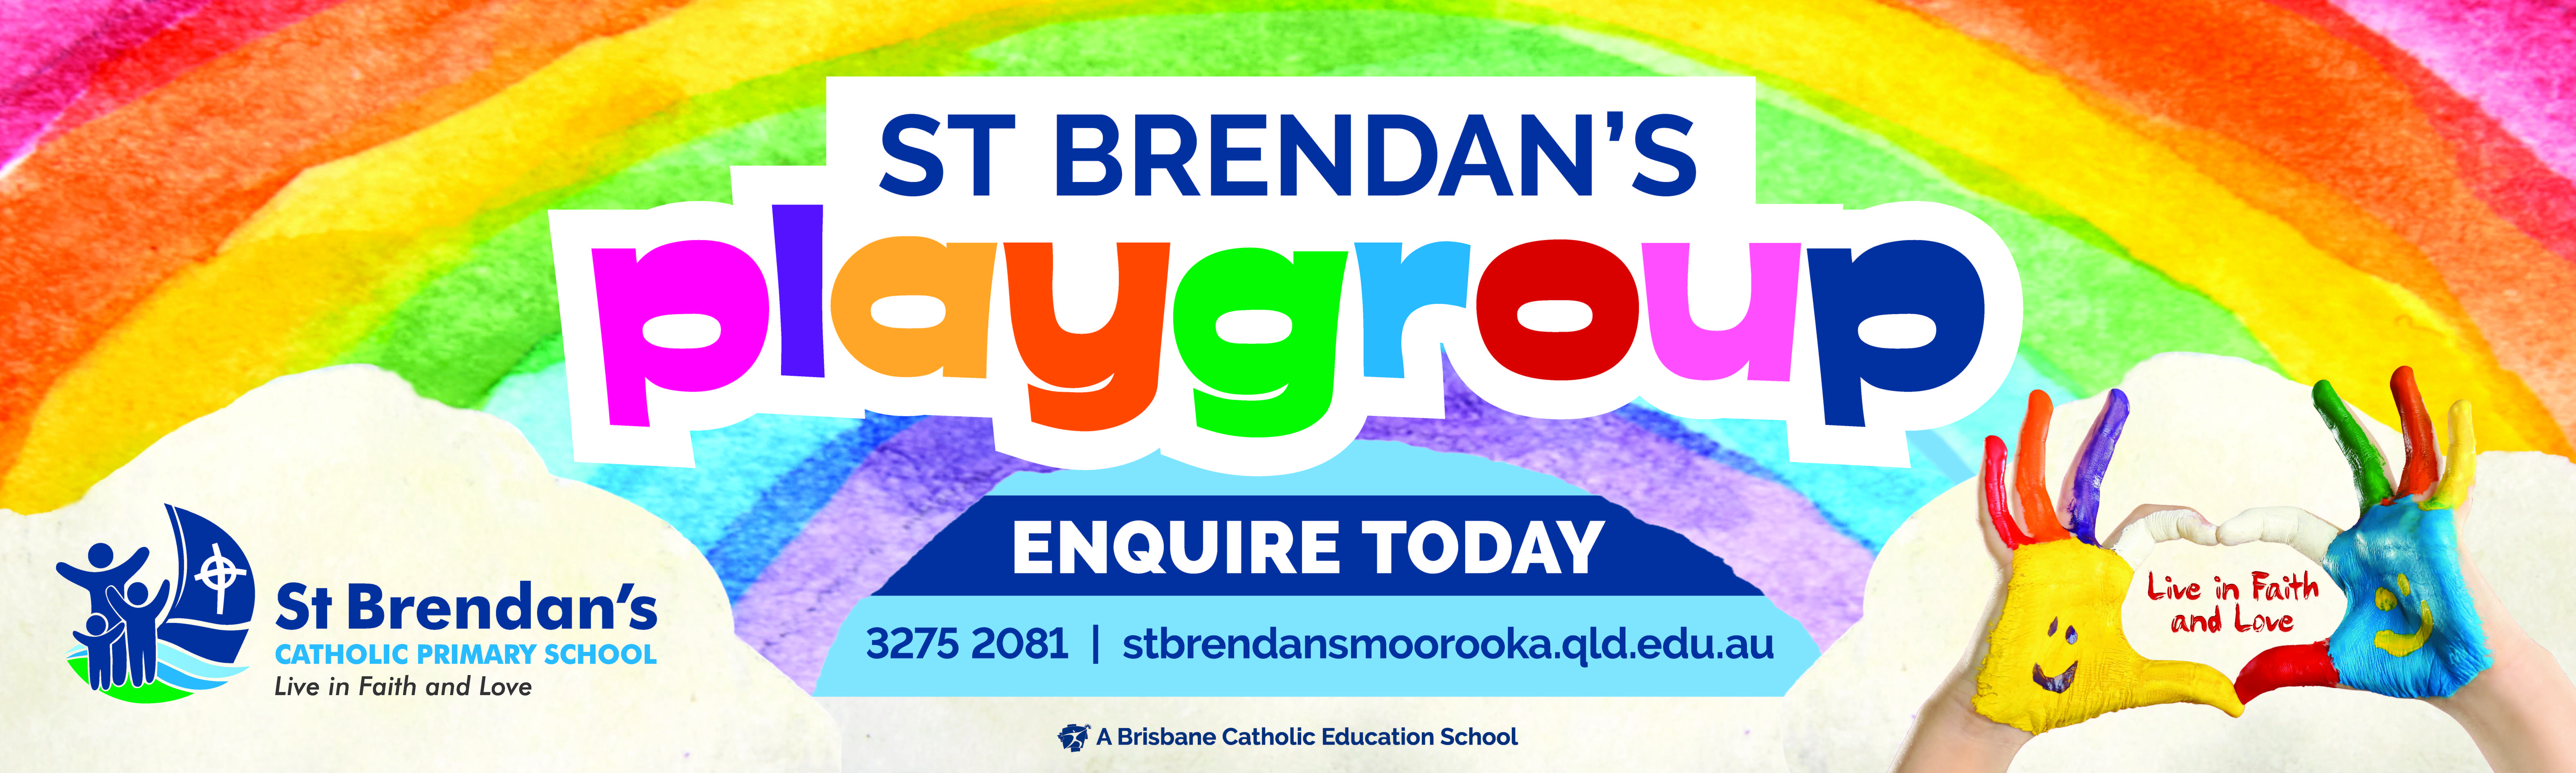 9282-BCE-St Brendan’s School Moorooka Playgroup Fence Banner-1200x4000mm-V2.jpg